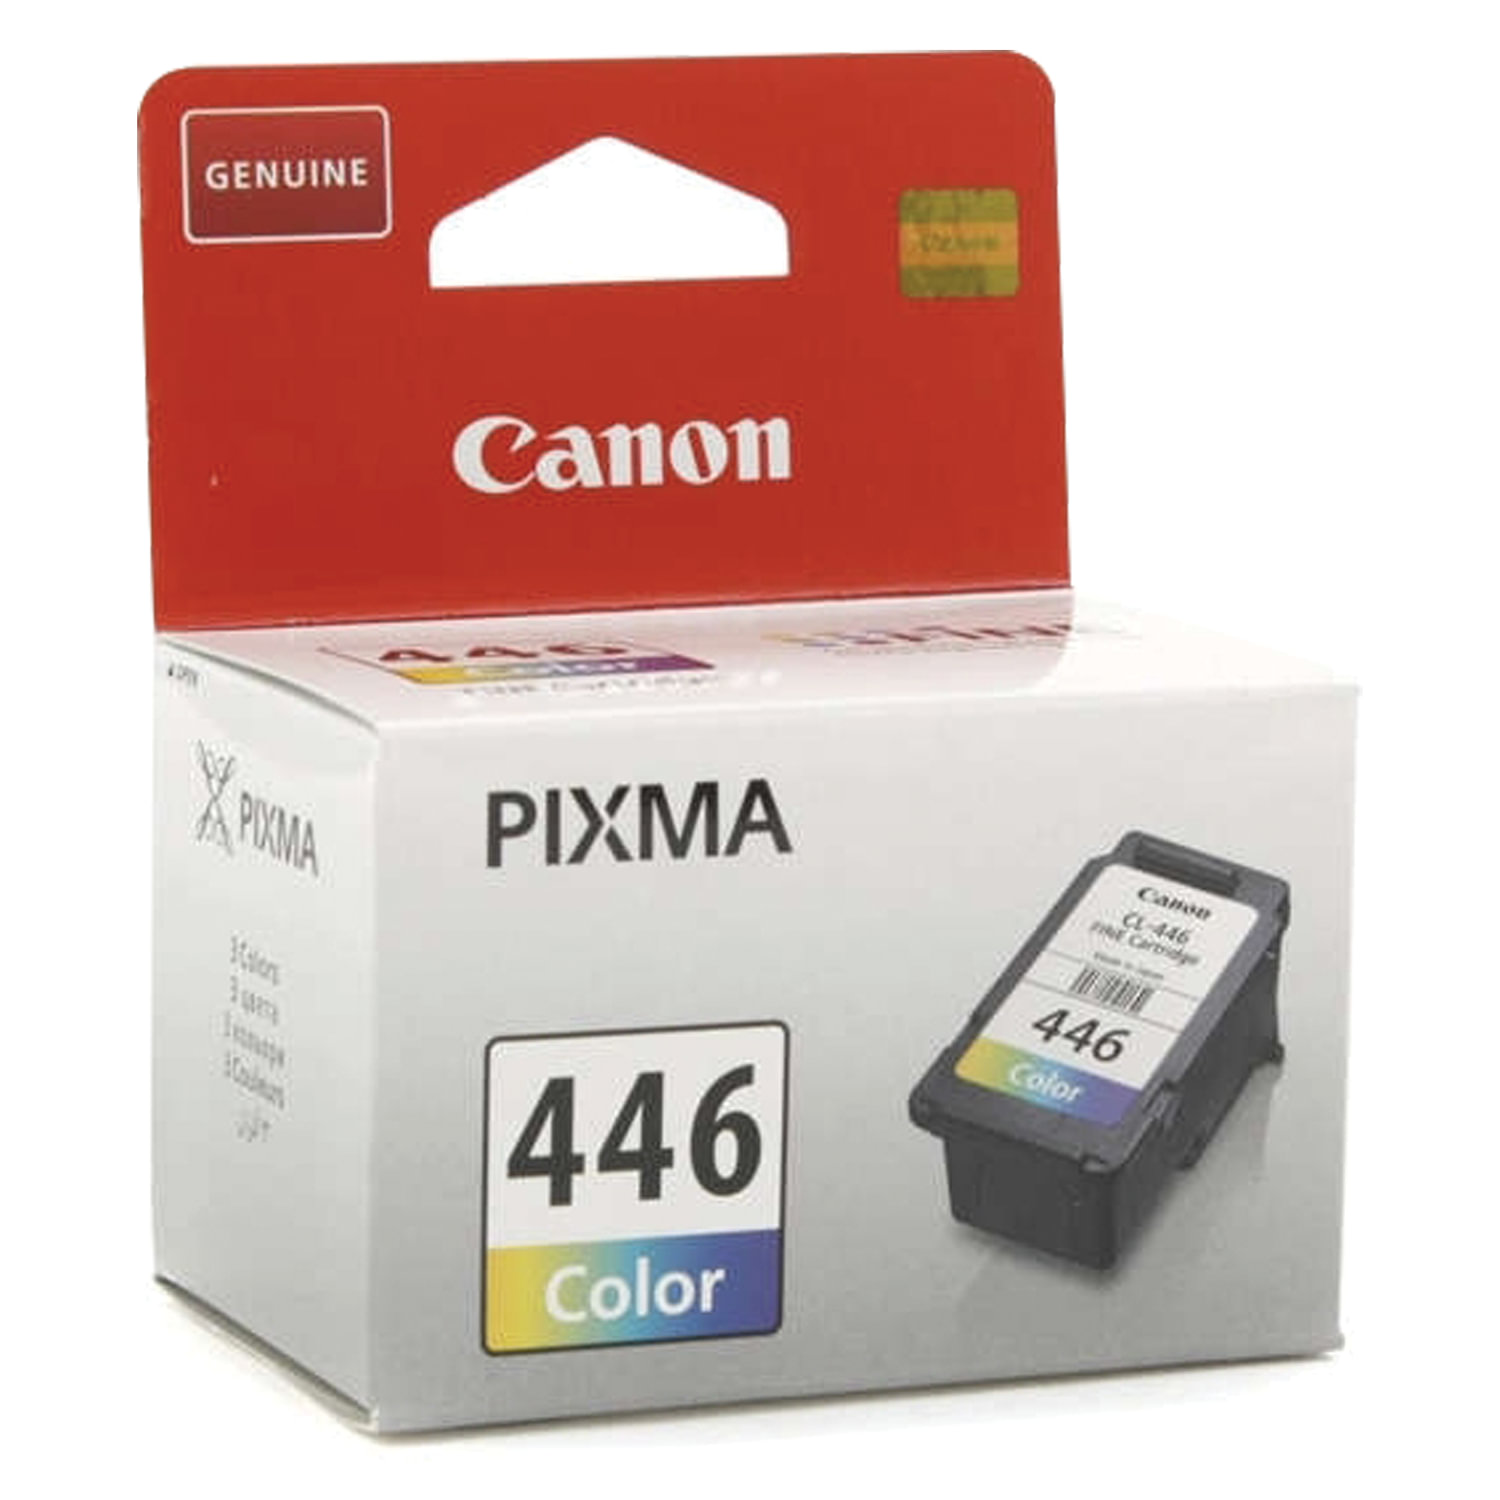 Купить картридж для принтера pg 445. Картридж Canon PG-445xl черный. Canon CL-446. Canon картридж Canon PG-445. PG-445 (8283b001).